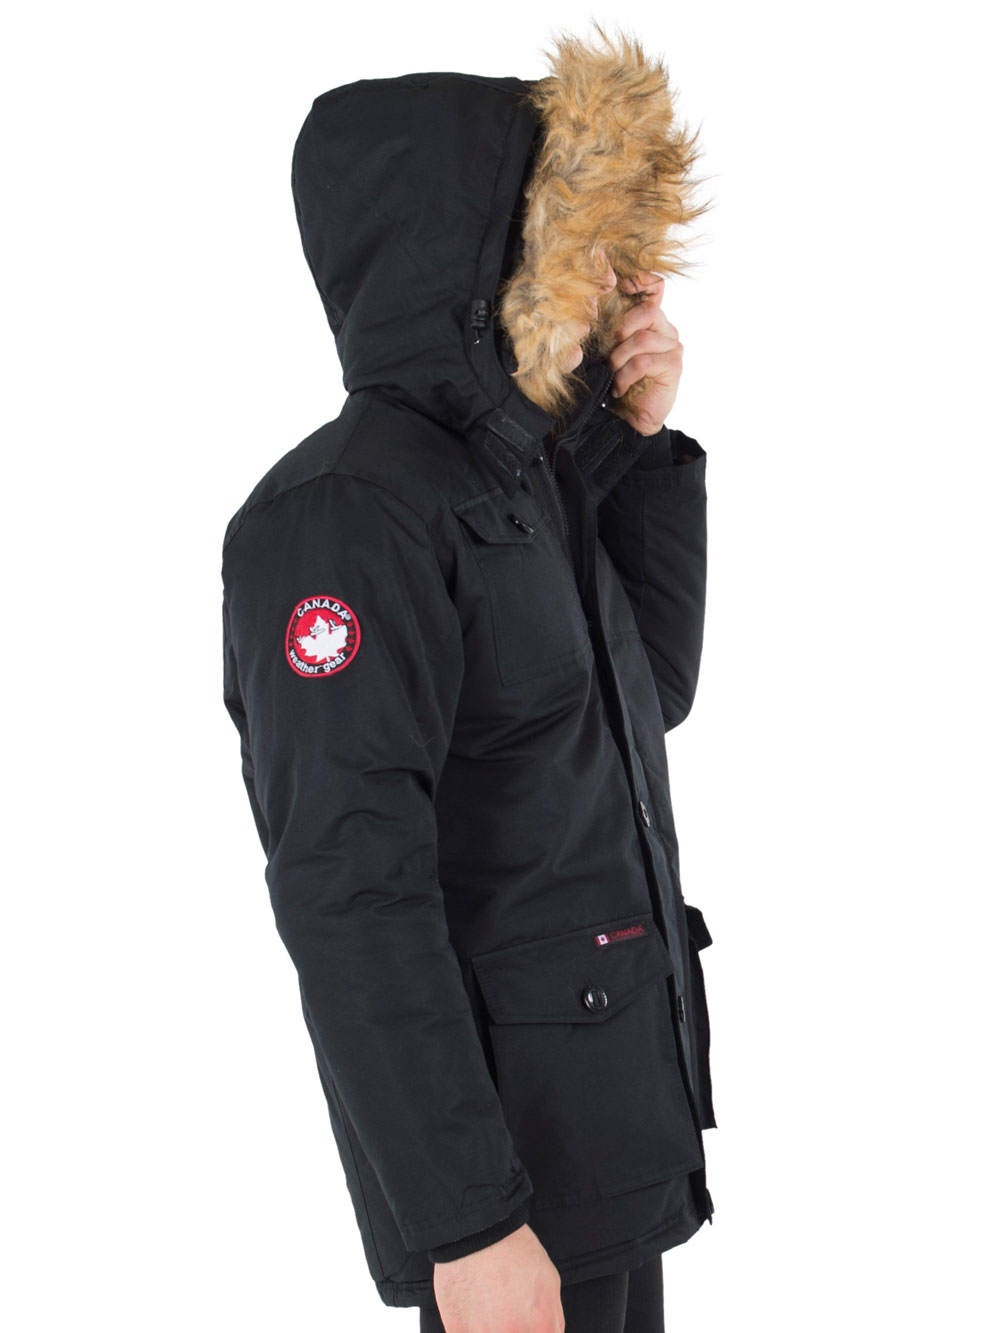 Canada Weather Gear Men's Insulated Jacket | eBay